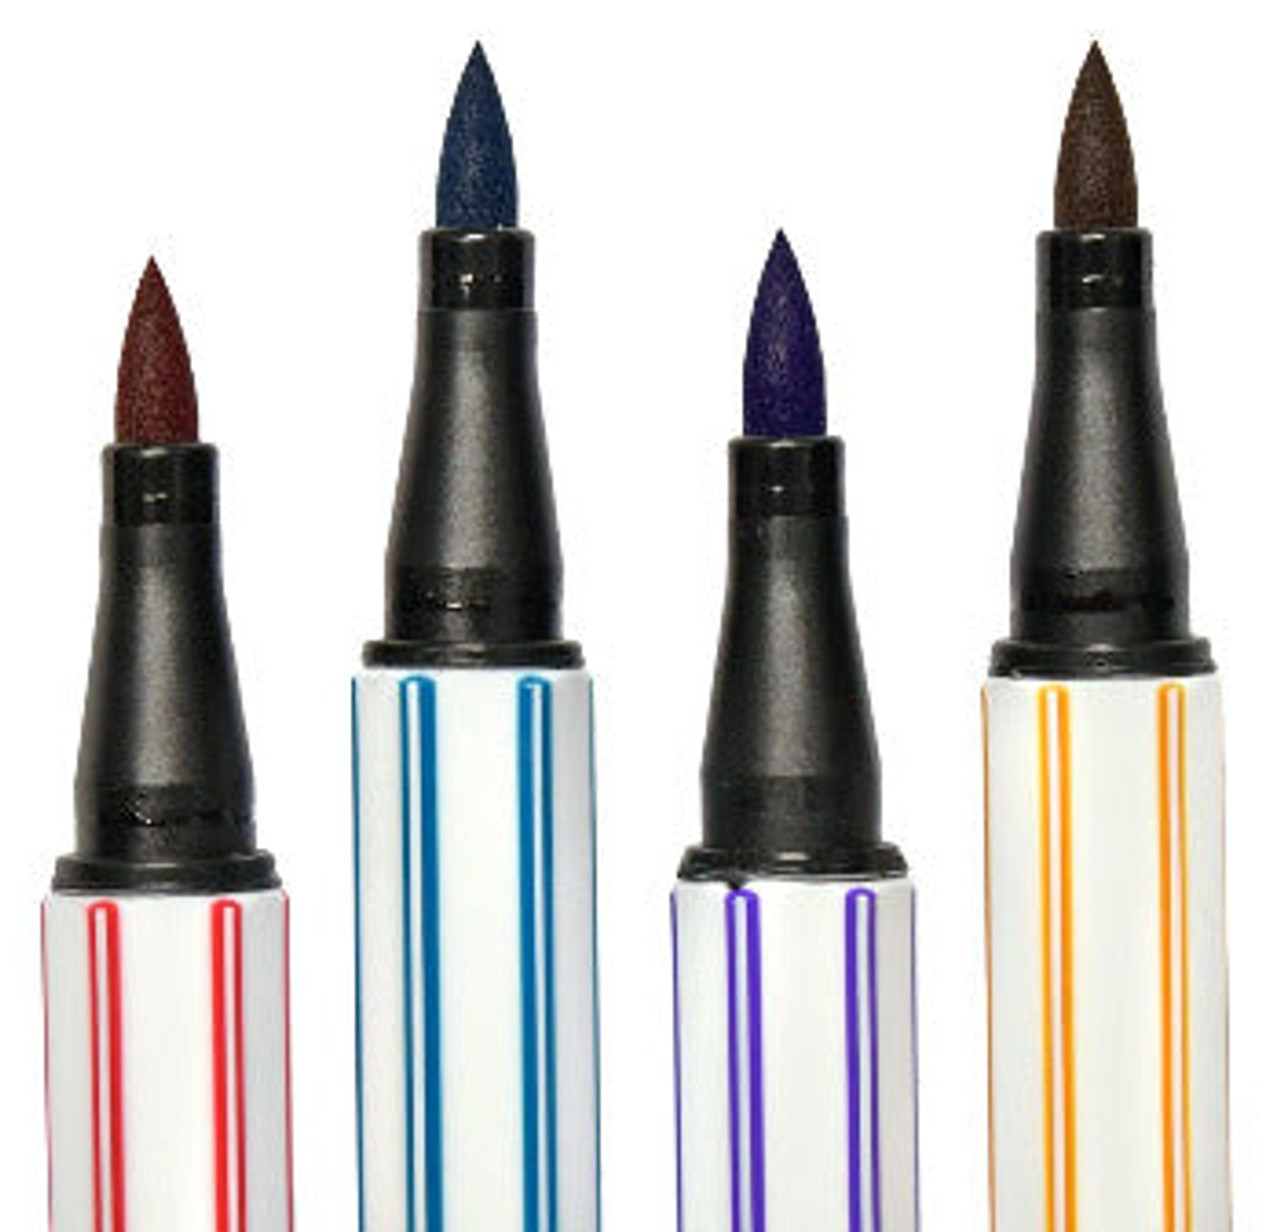 Wholesale Stabilo Pen 68- 240 Pen Display- Pinnacle Colors Wholesale